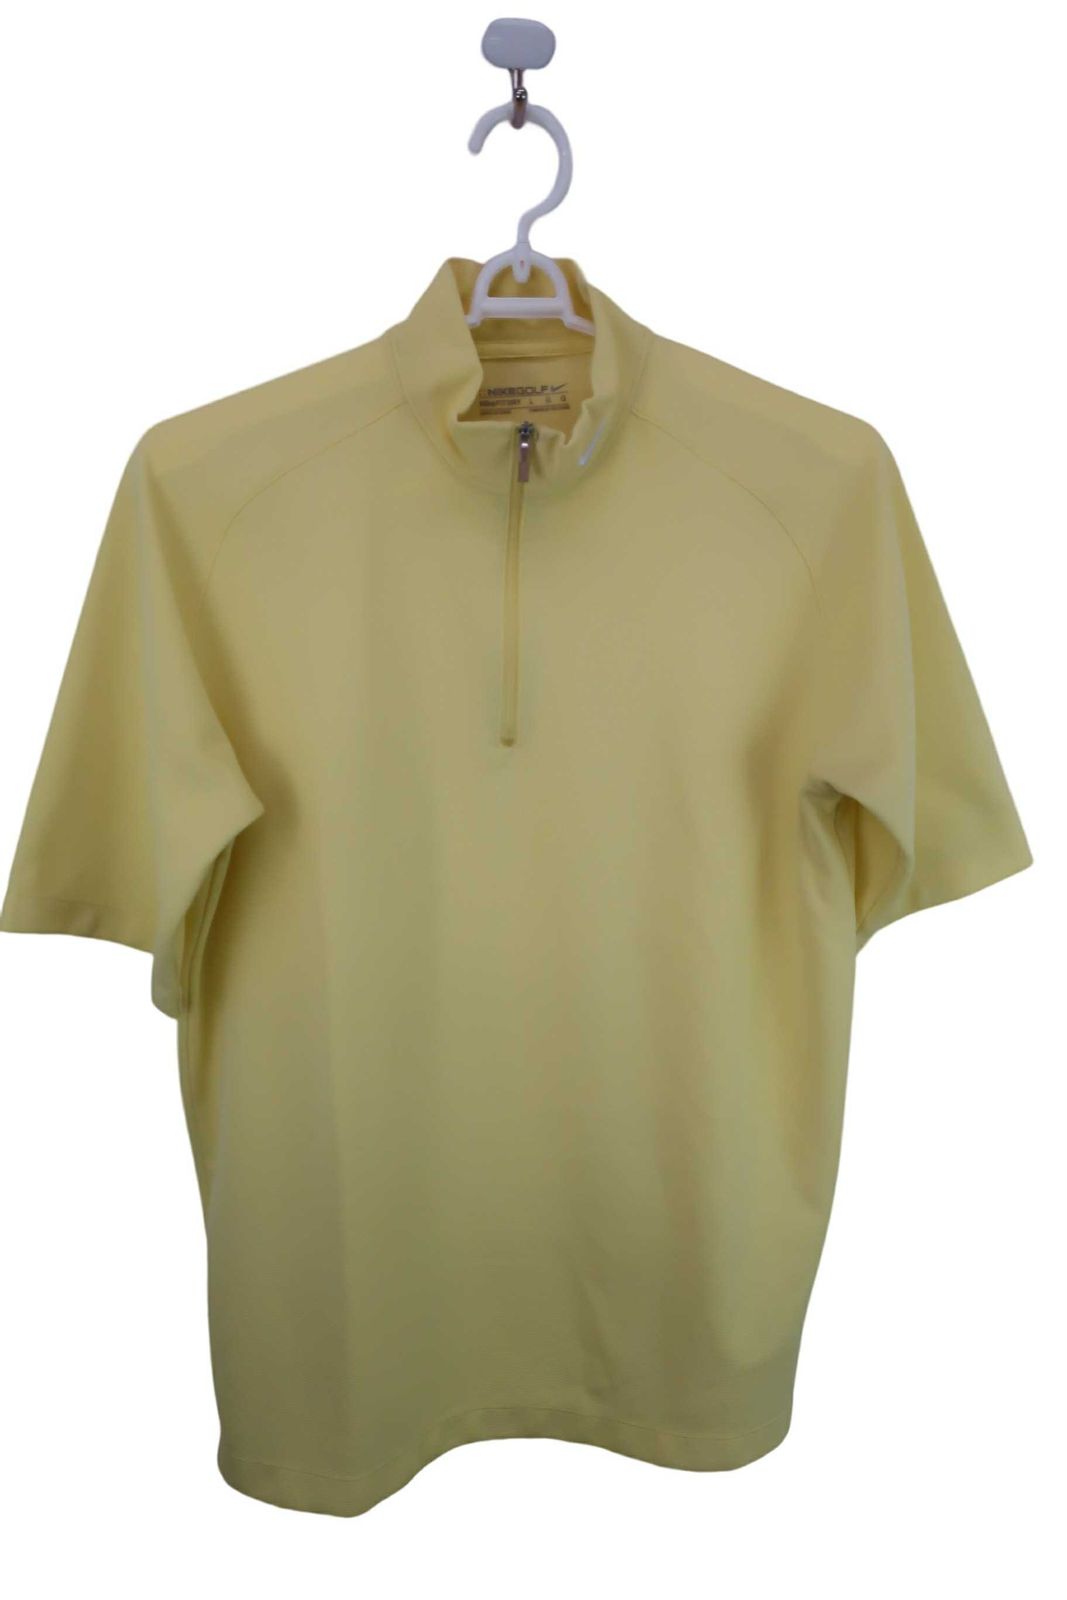 NIKE GOLF(ナイキゴルフ) 半袖ハーフジップシャツ 黄色 メンズ LGG ゴルフウェア 2301-0043 中古 - メルカリ